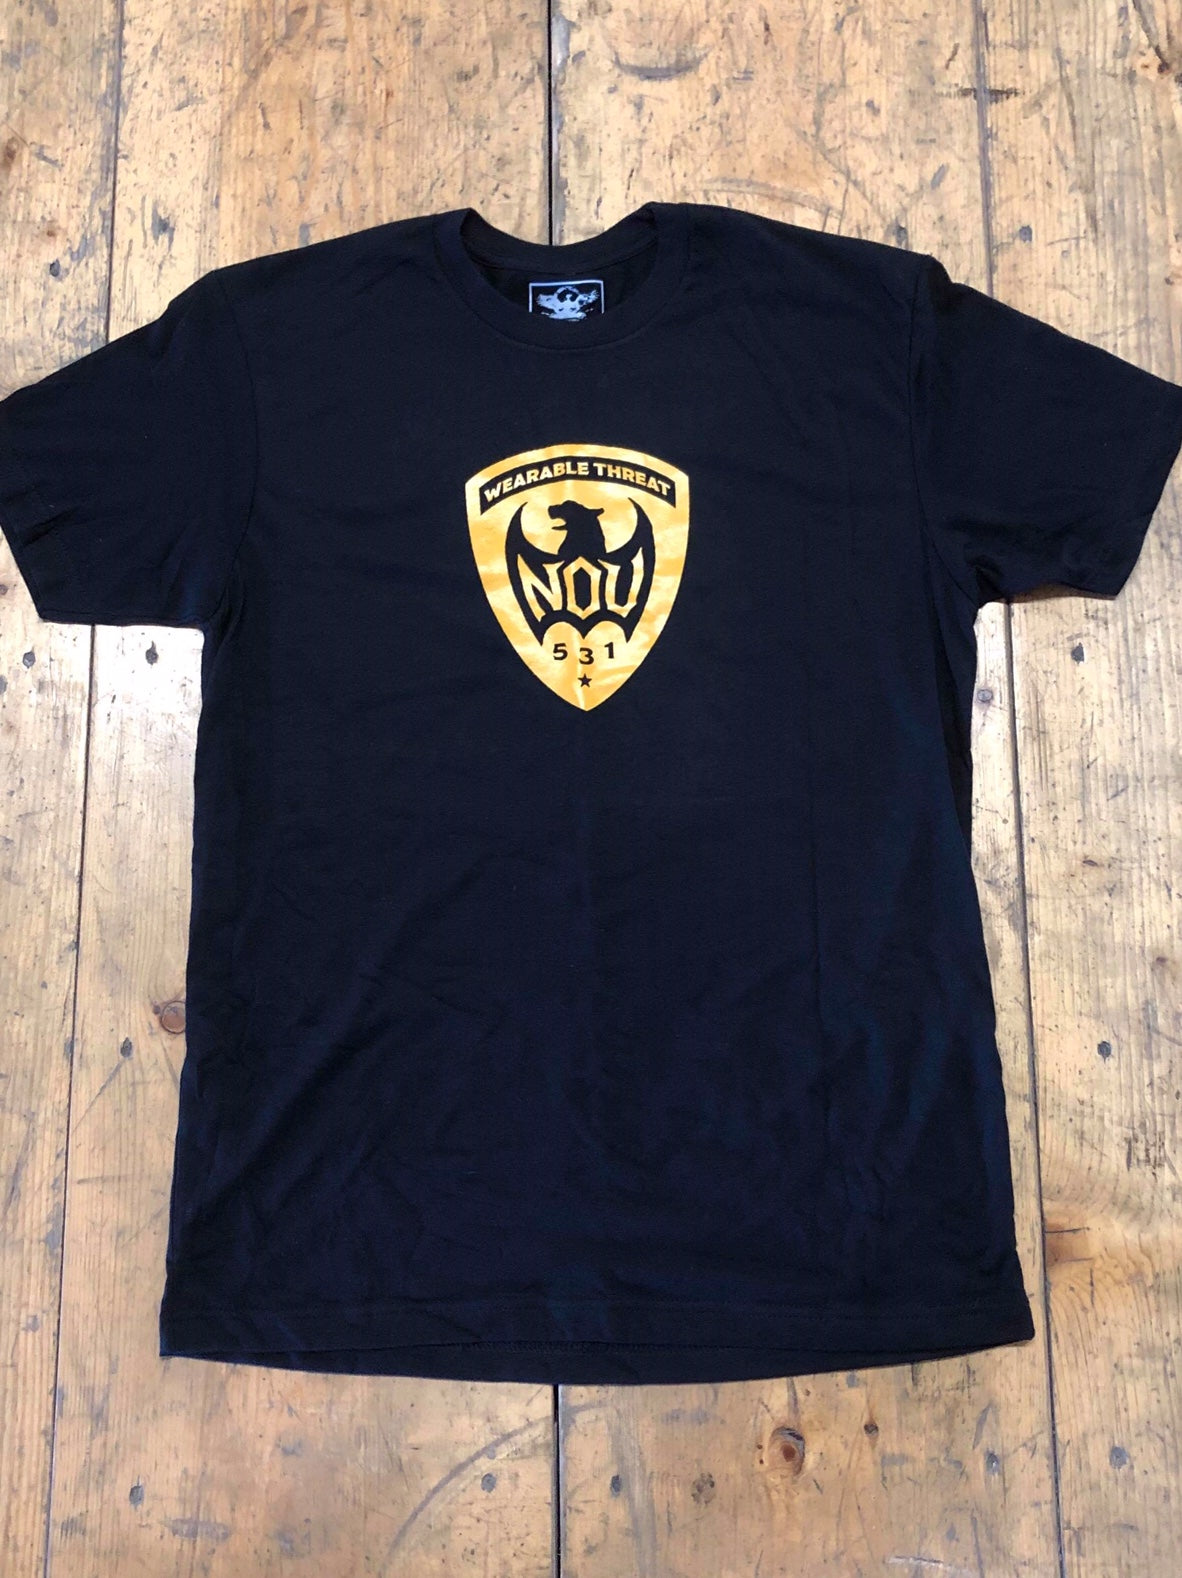 N.O.V. Shield Shirt - JimWendler.com 